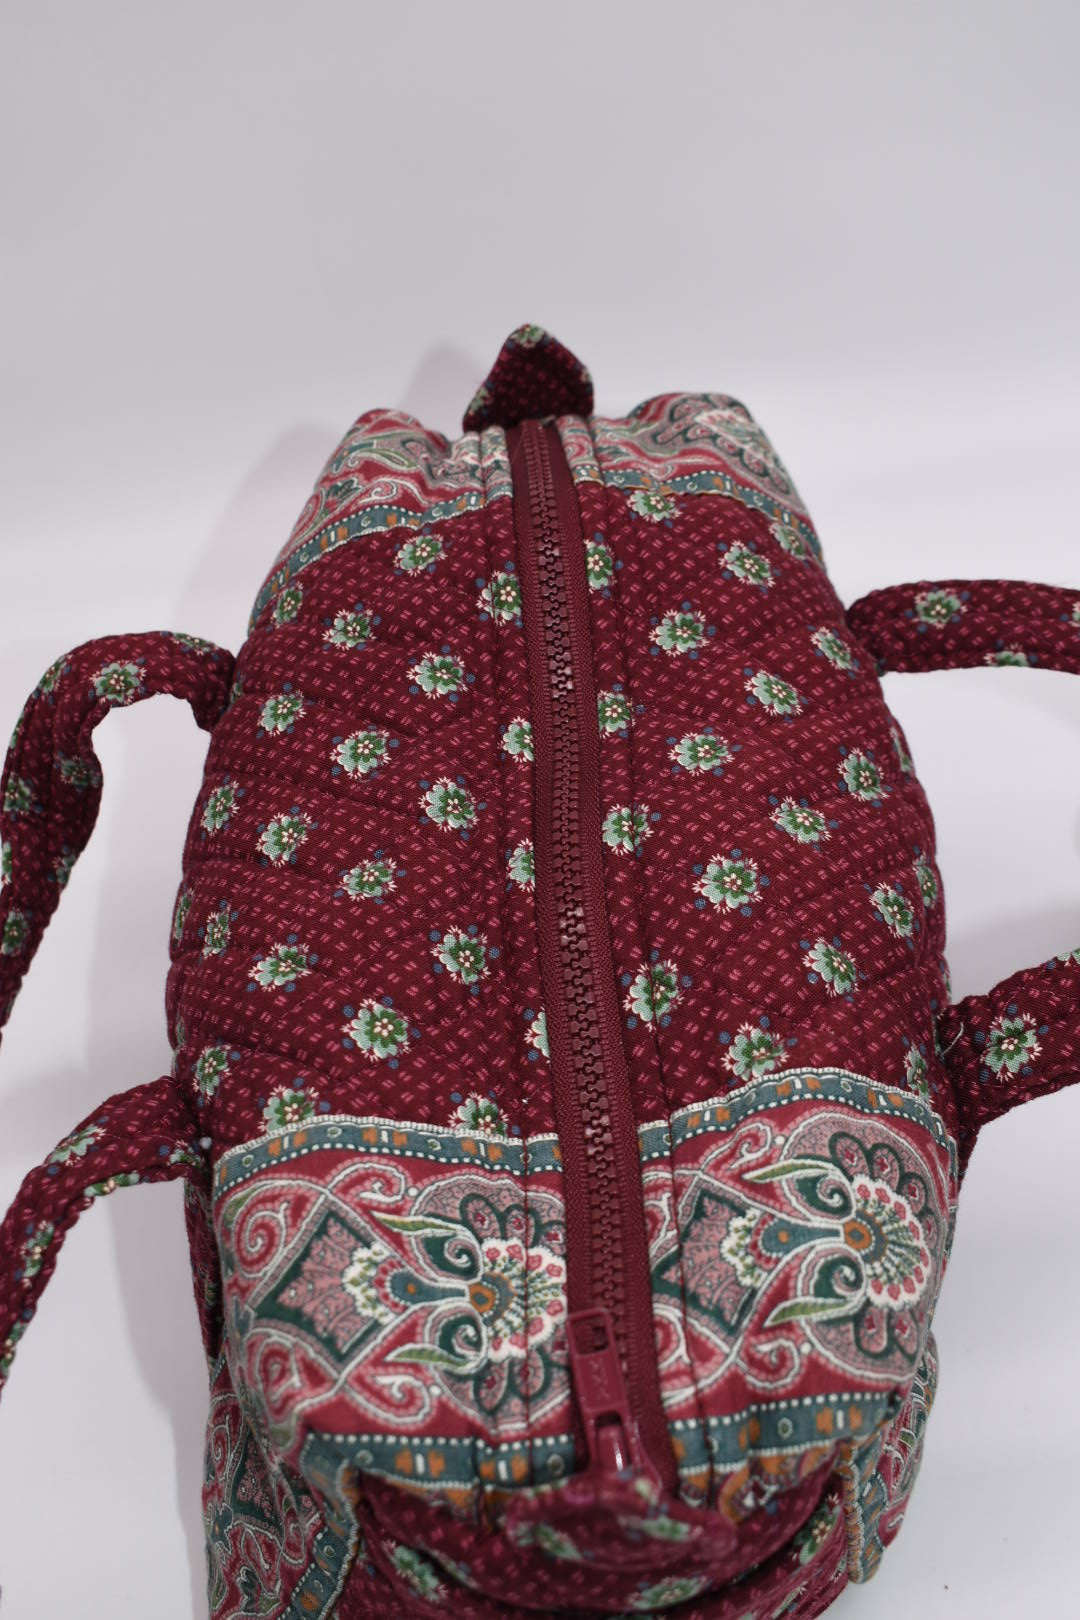 Vintage Vera Bradley Shoulder Bag in "Plum -1987" Pattern